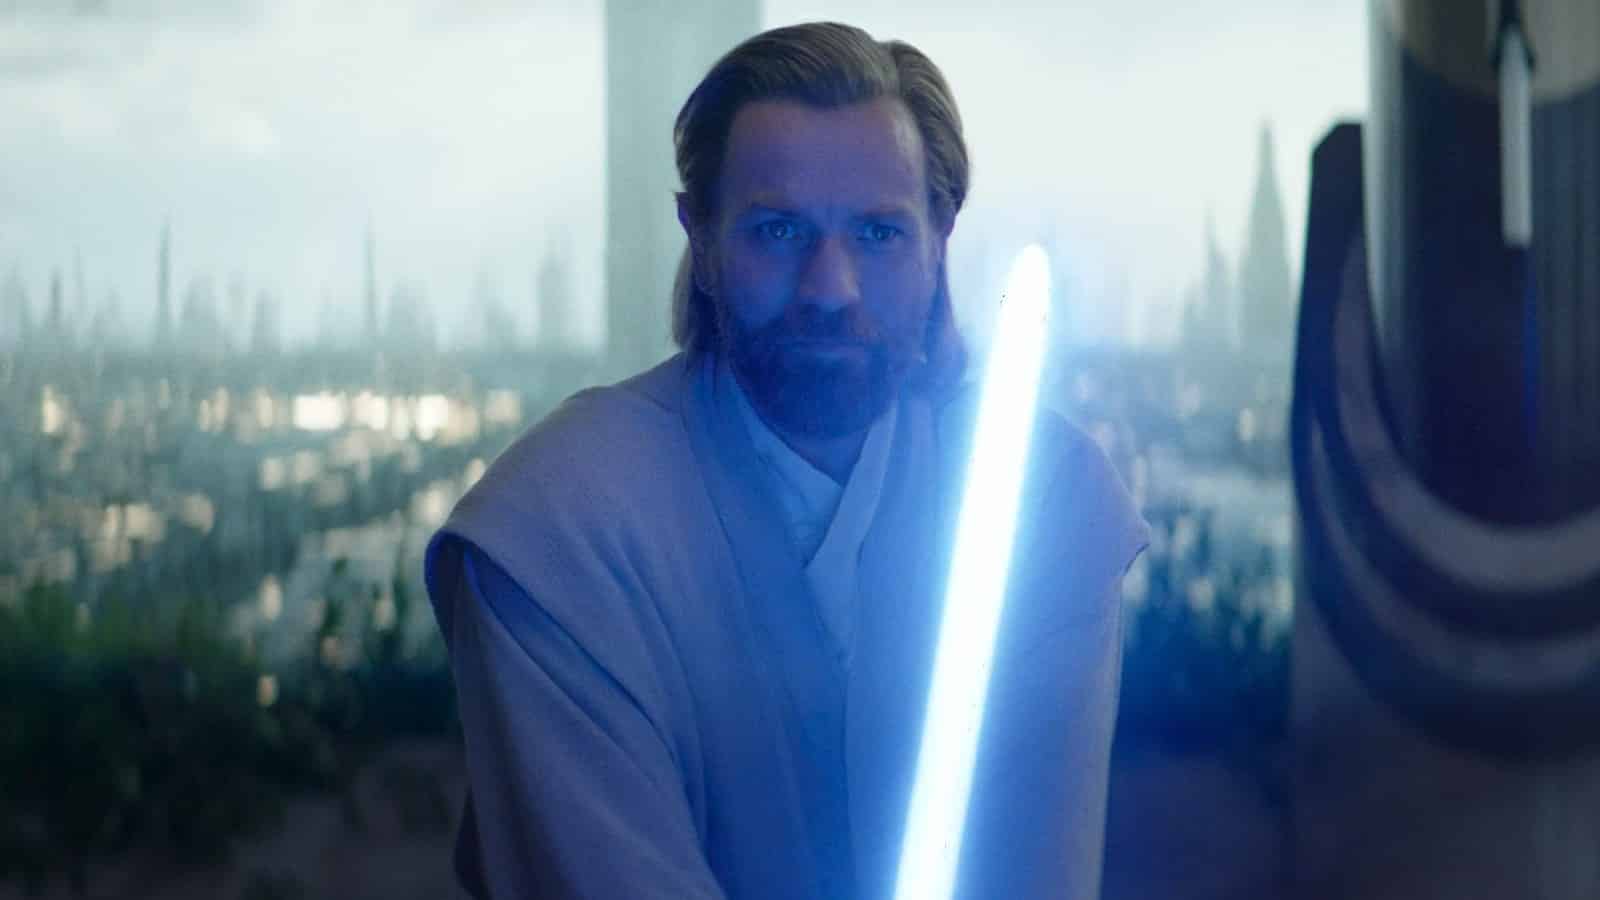 Ewan McGregor as Obi-Wan Kenobi